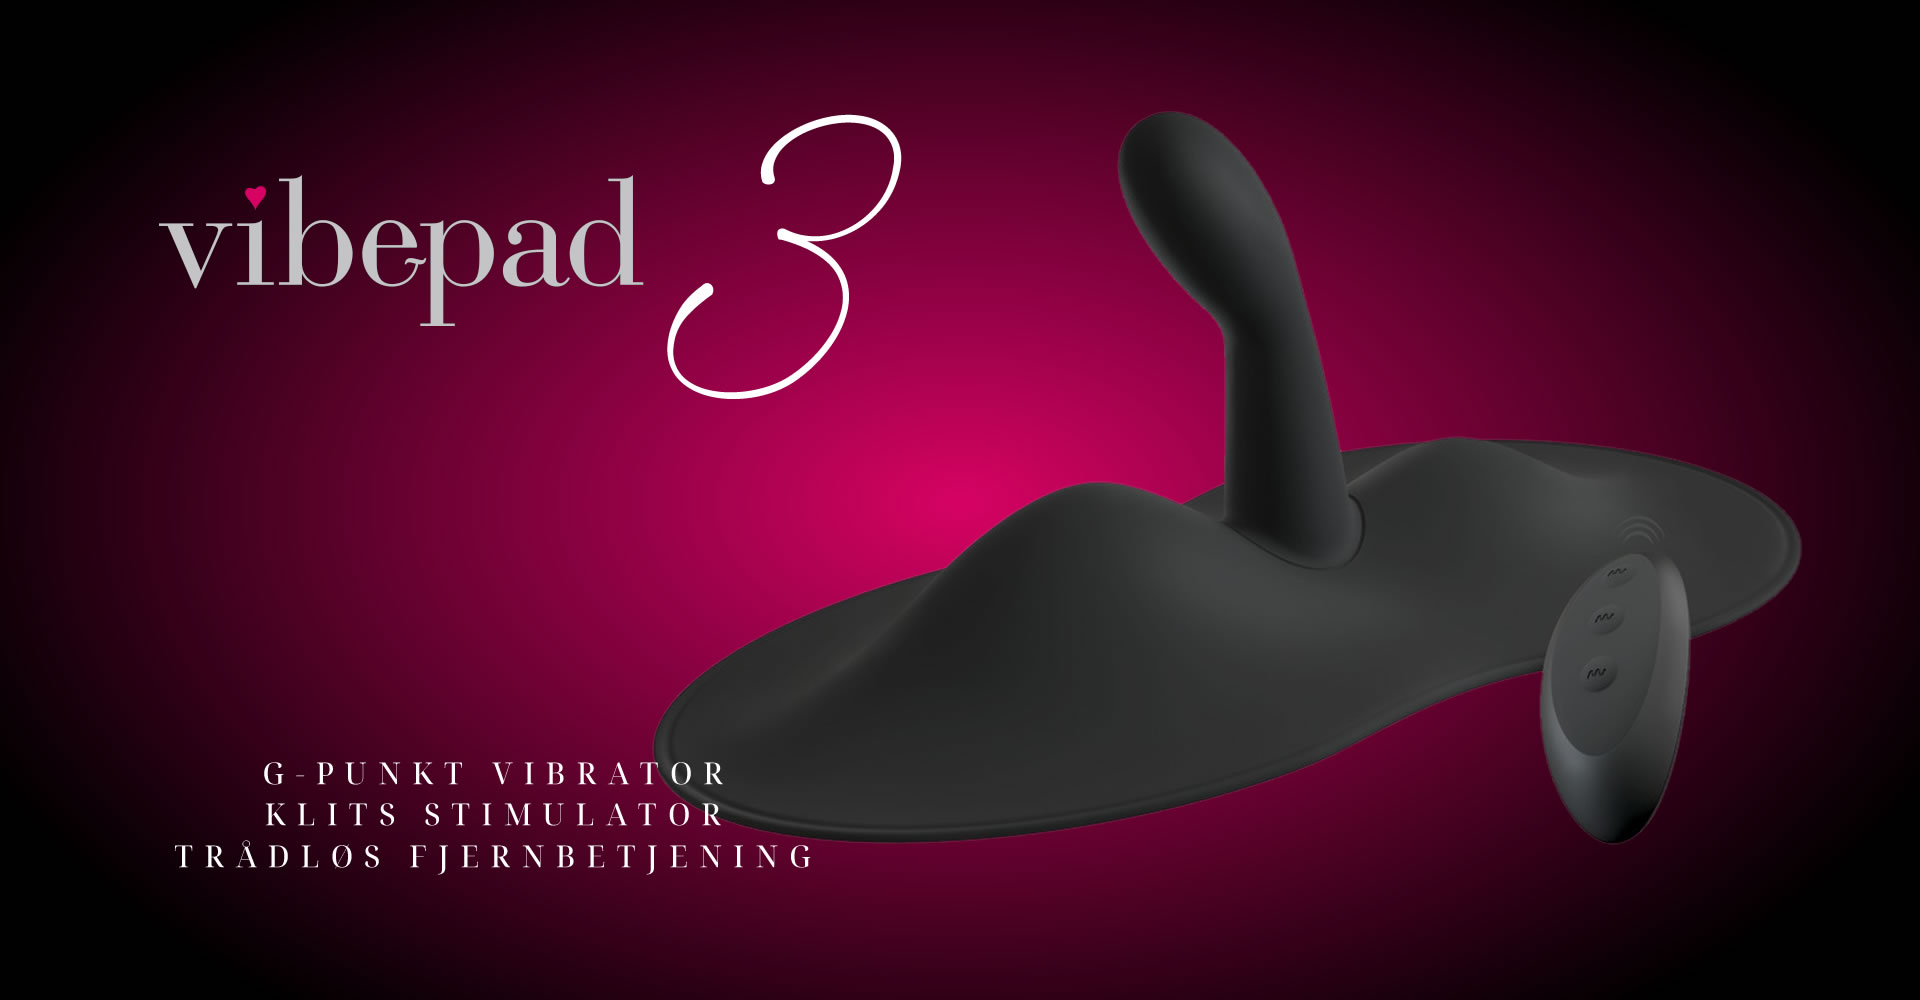 Vibepad 3 klitoris stimulator med Vibrator og Fjernbetjening